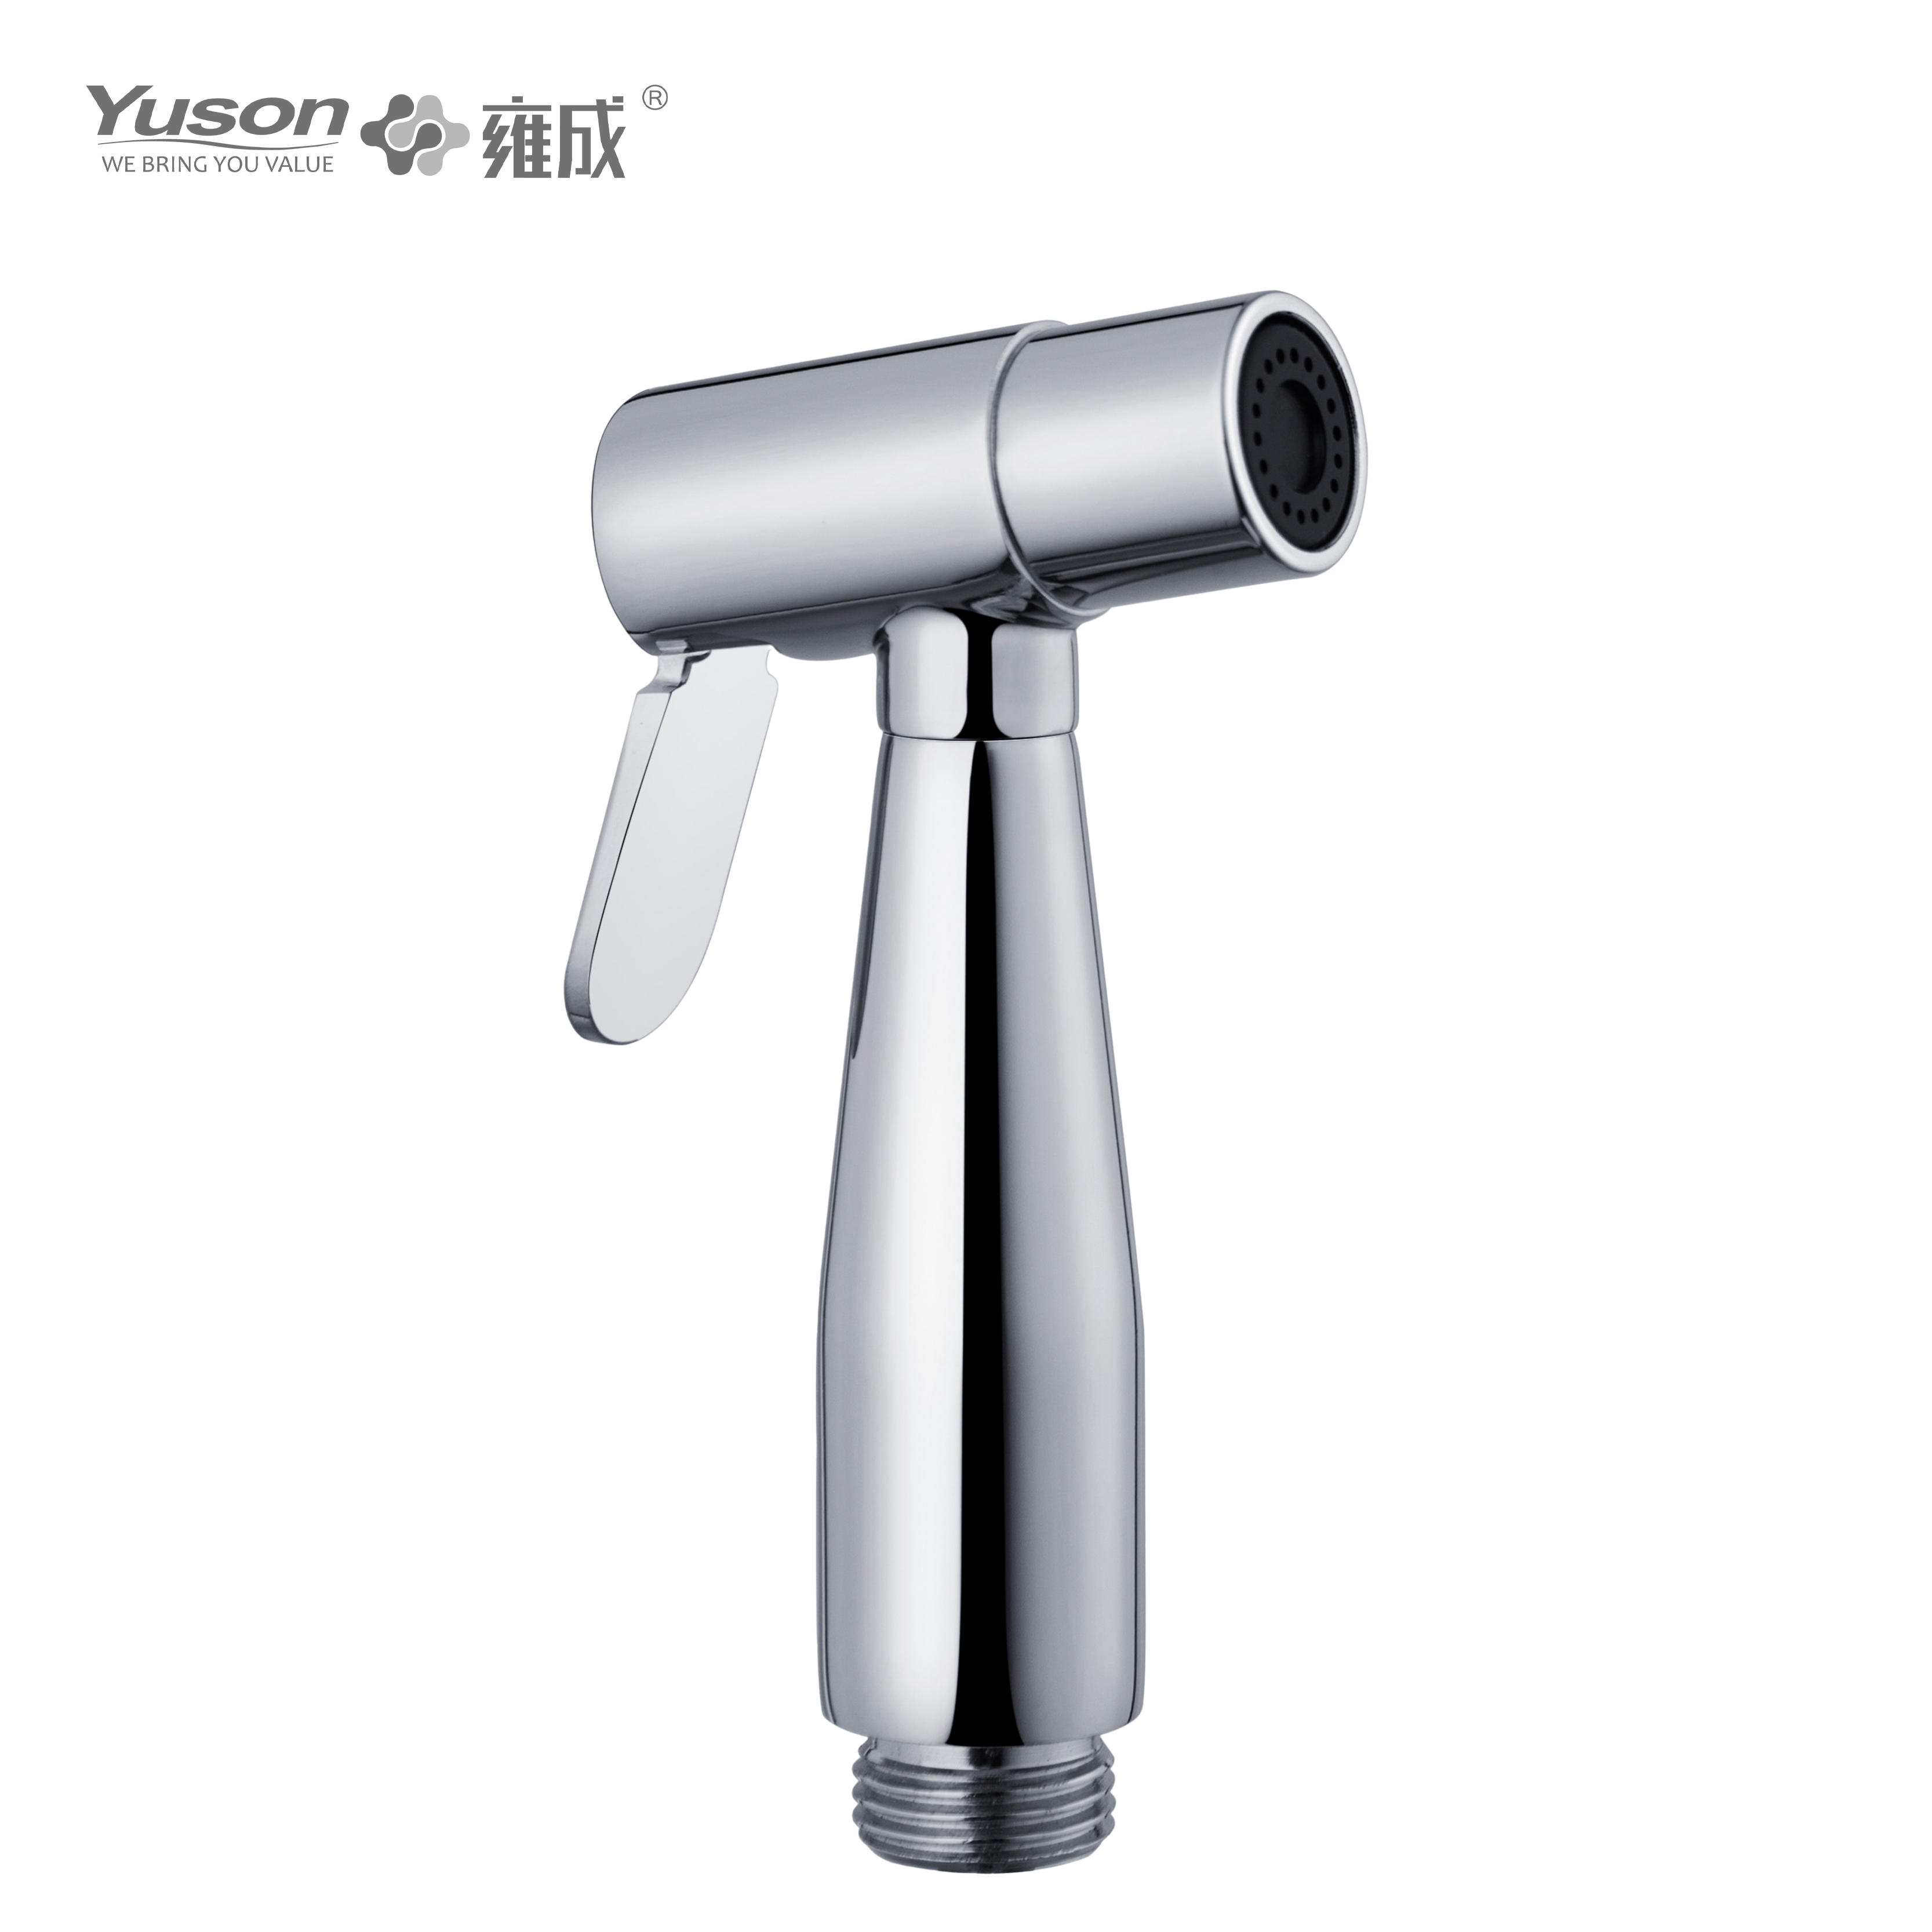 YS36416	Full Brass Handheld Toilet hygiene sprayer, Portable bidet Personal Cleansing Sprayer